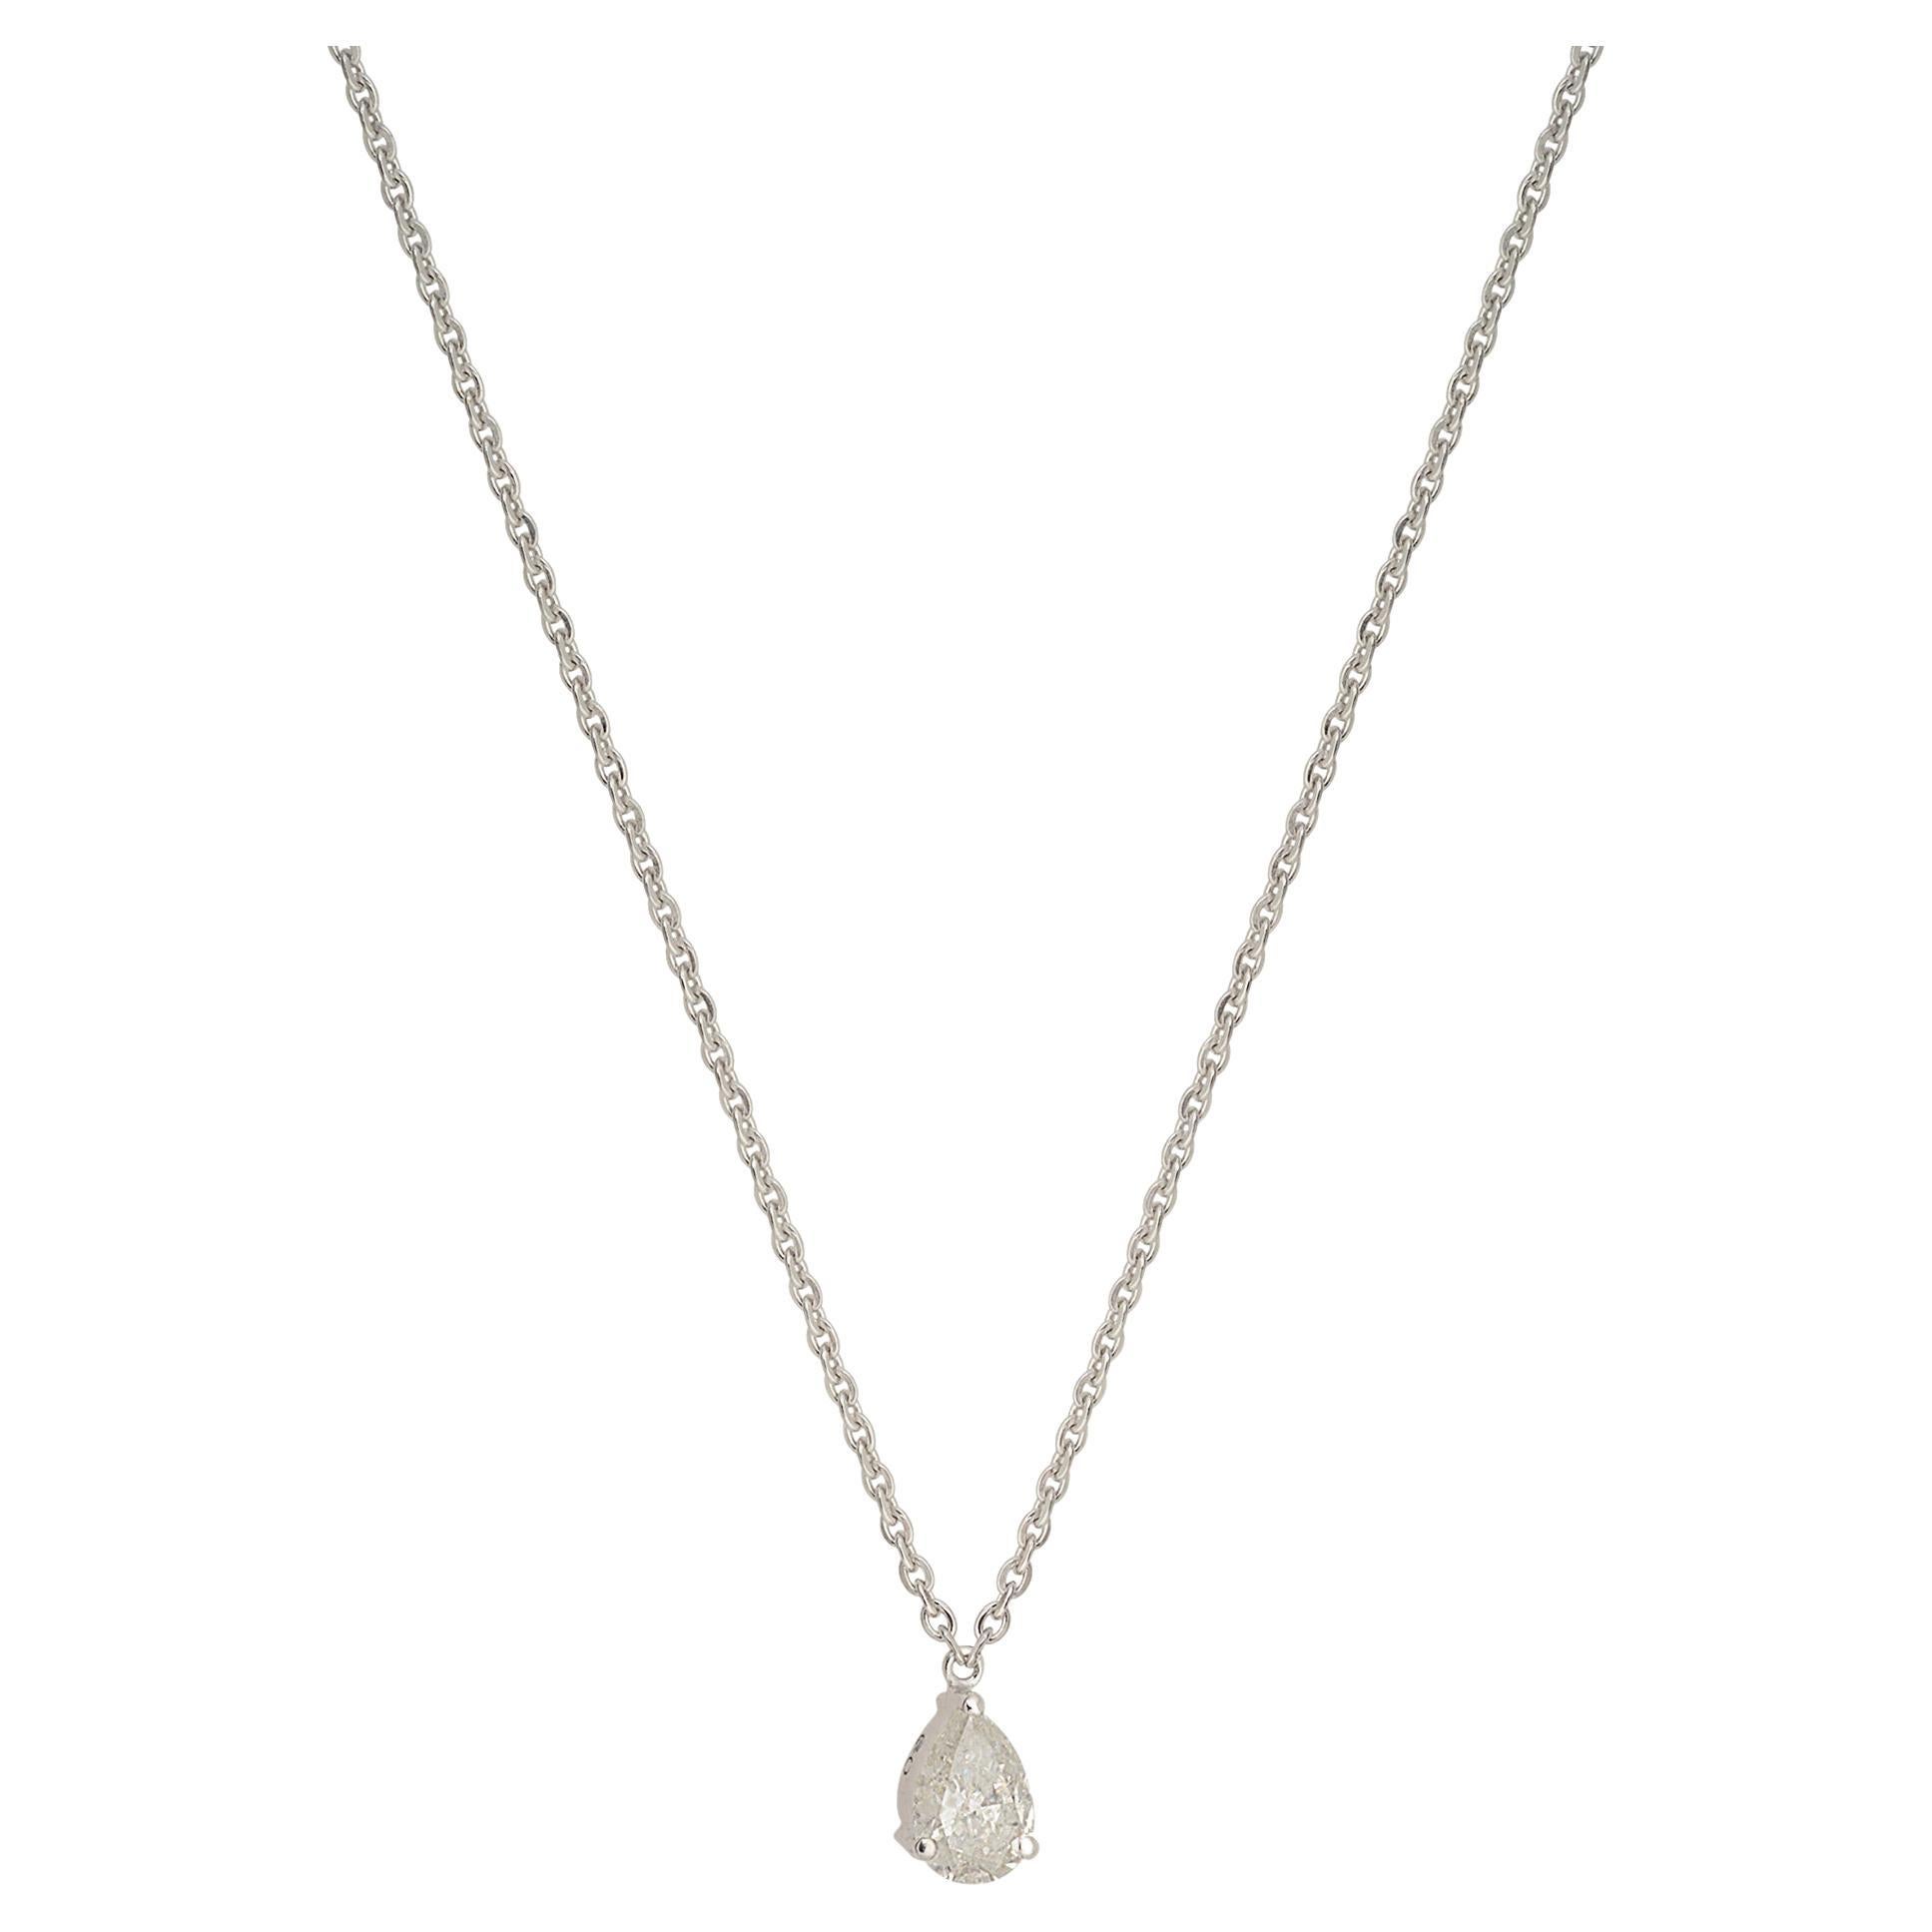 0.57 Carat SI/HI Diamond Pear Shape Charm Pendant Necklace 14 Karat White Gold